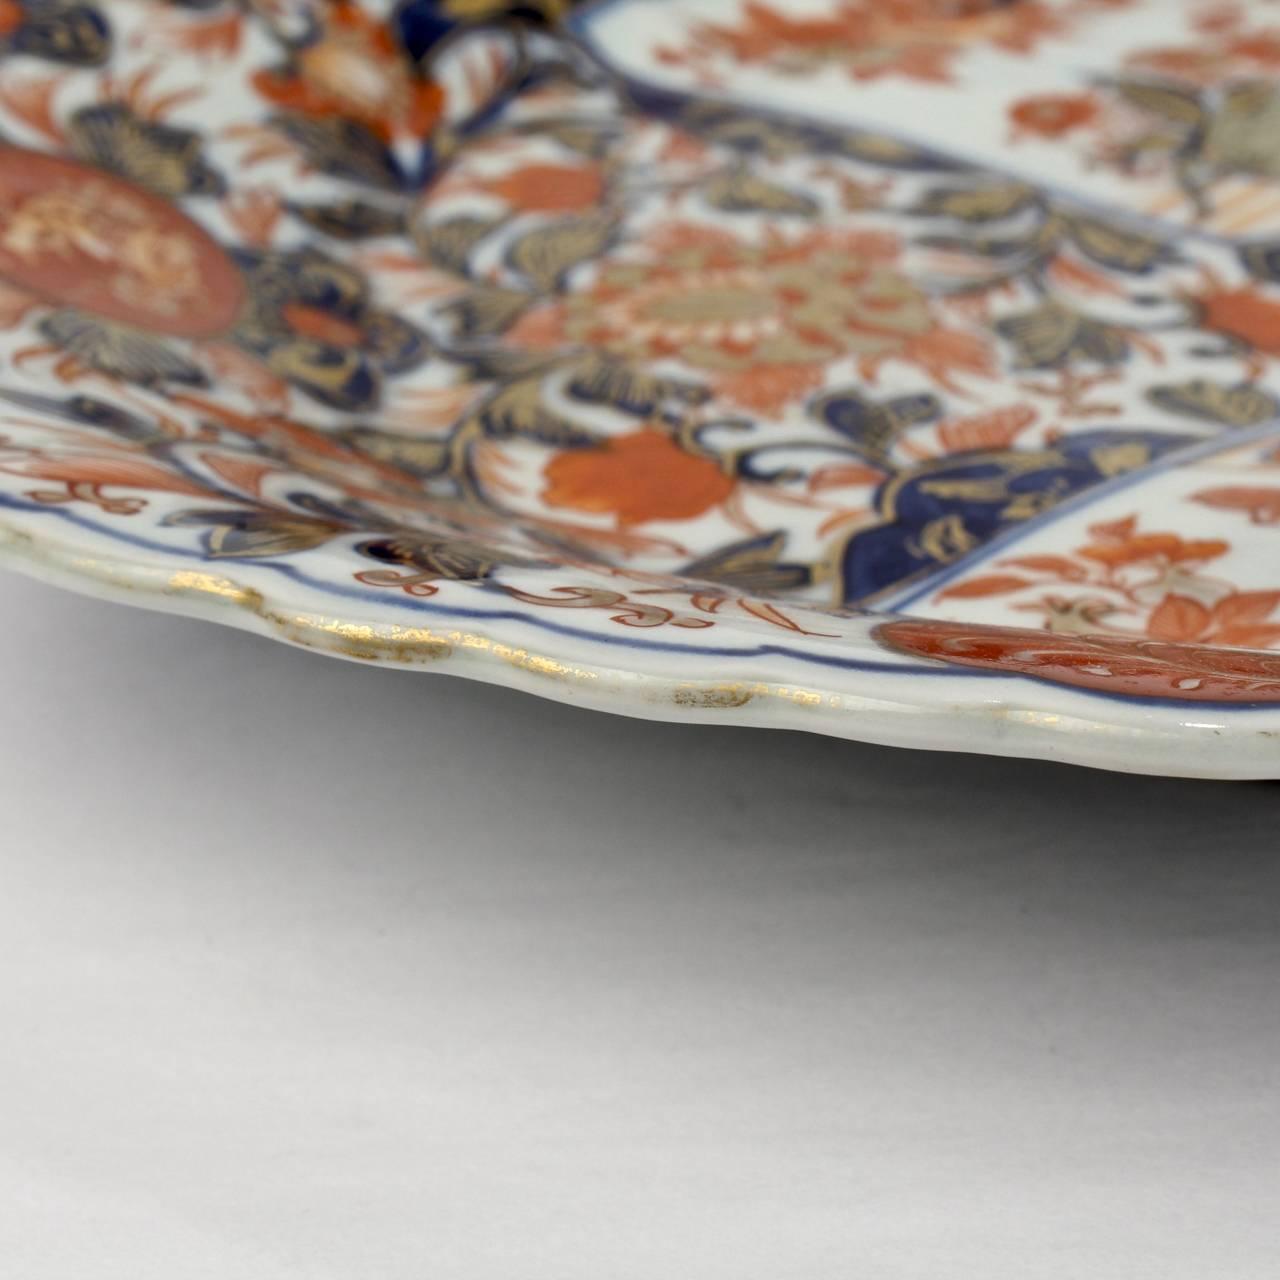 Large Antique Meiji Period Japanese Imari Porcelain Platter or Tray 1